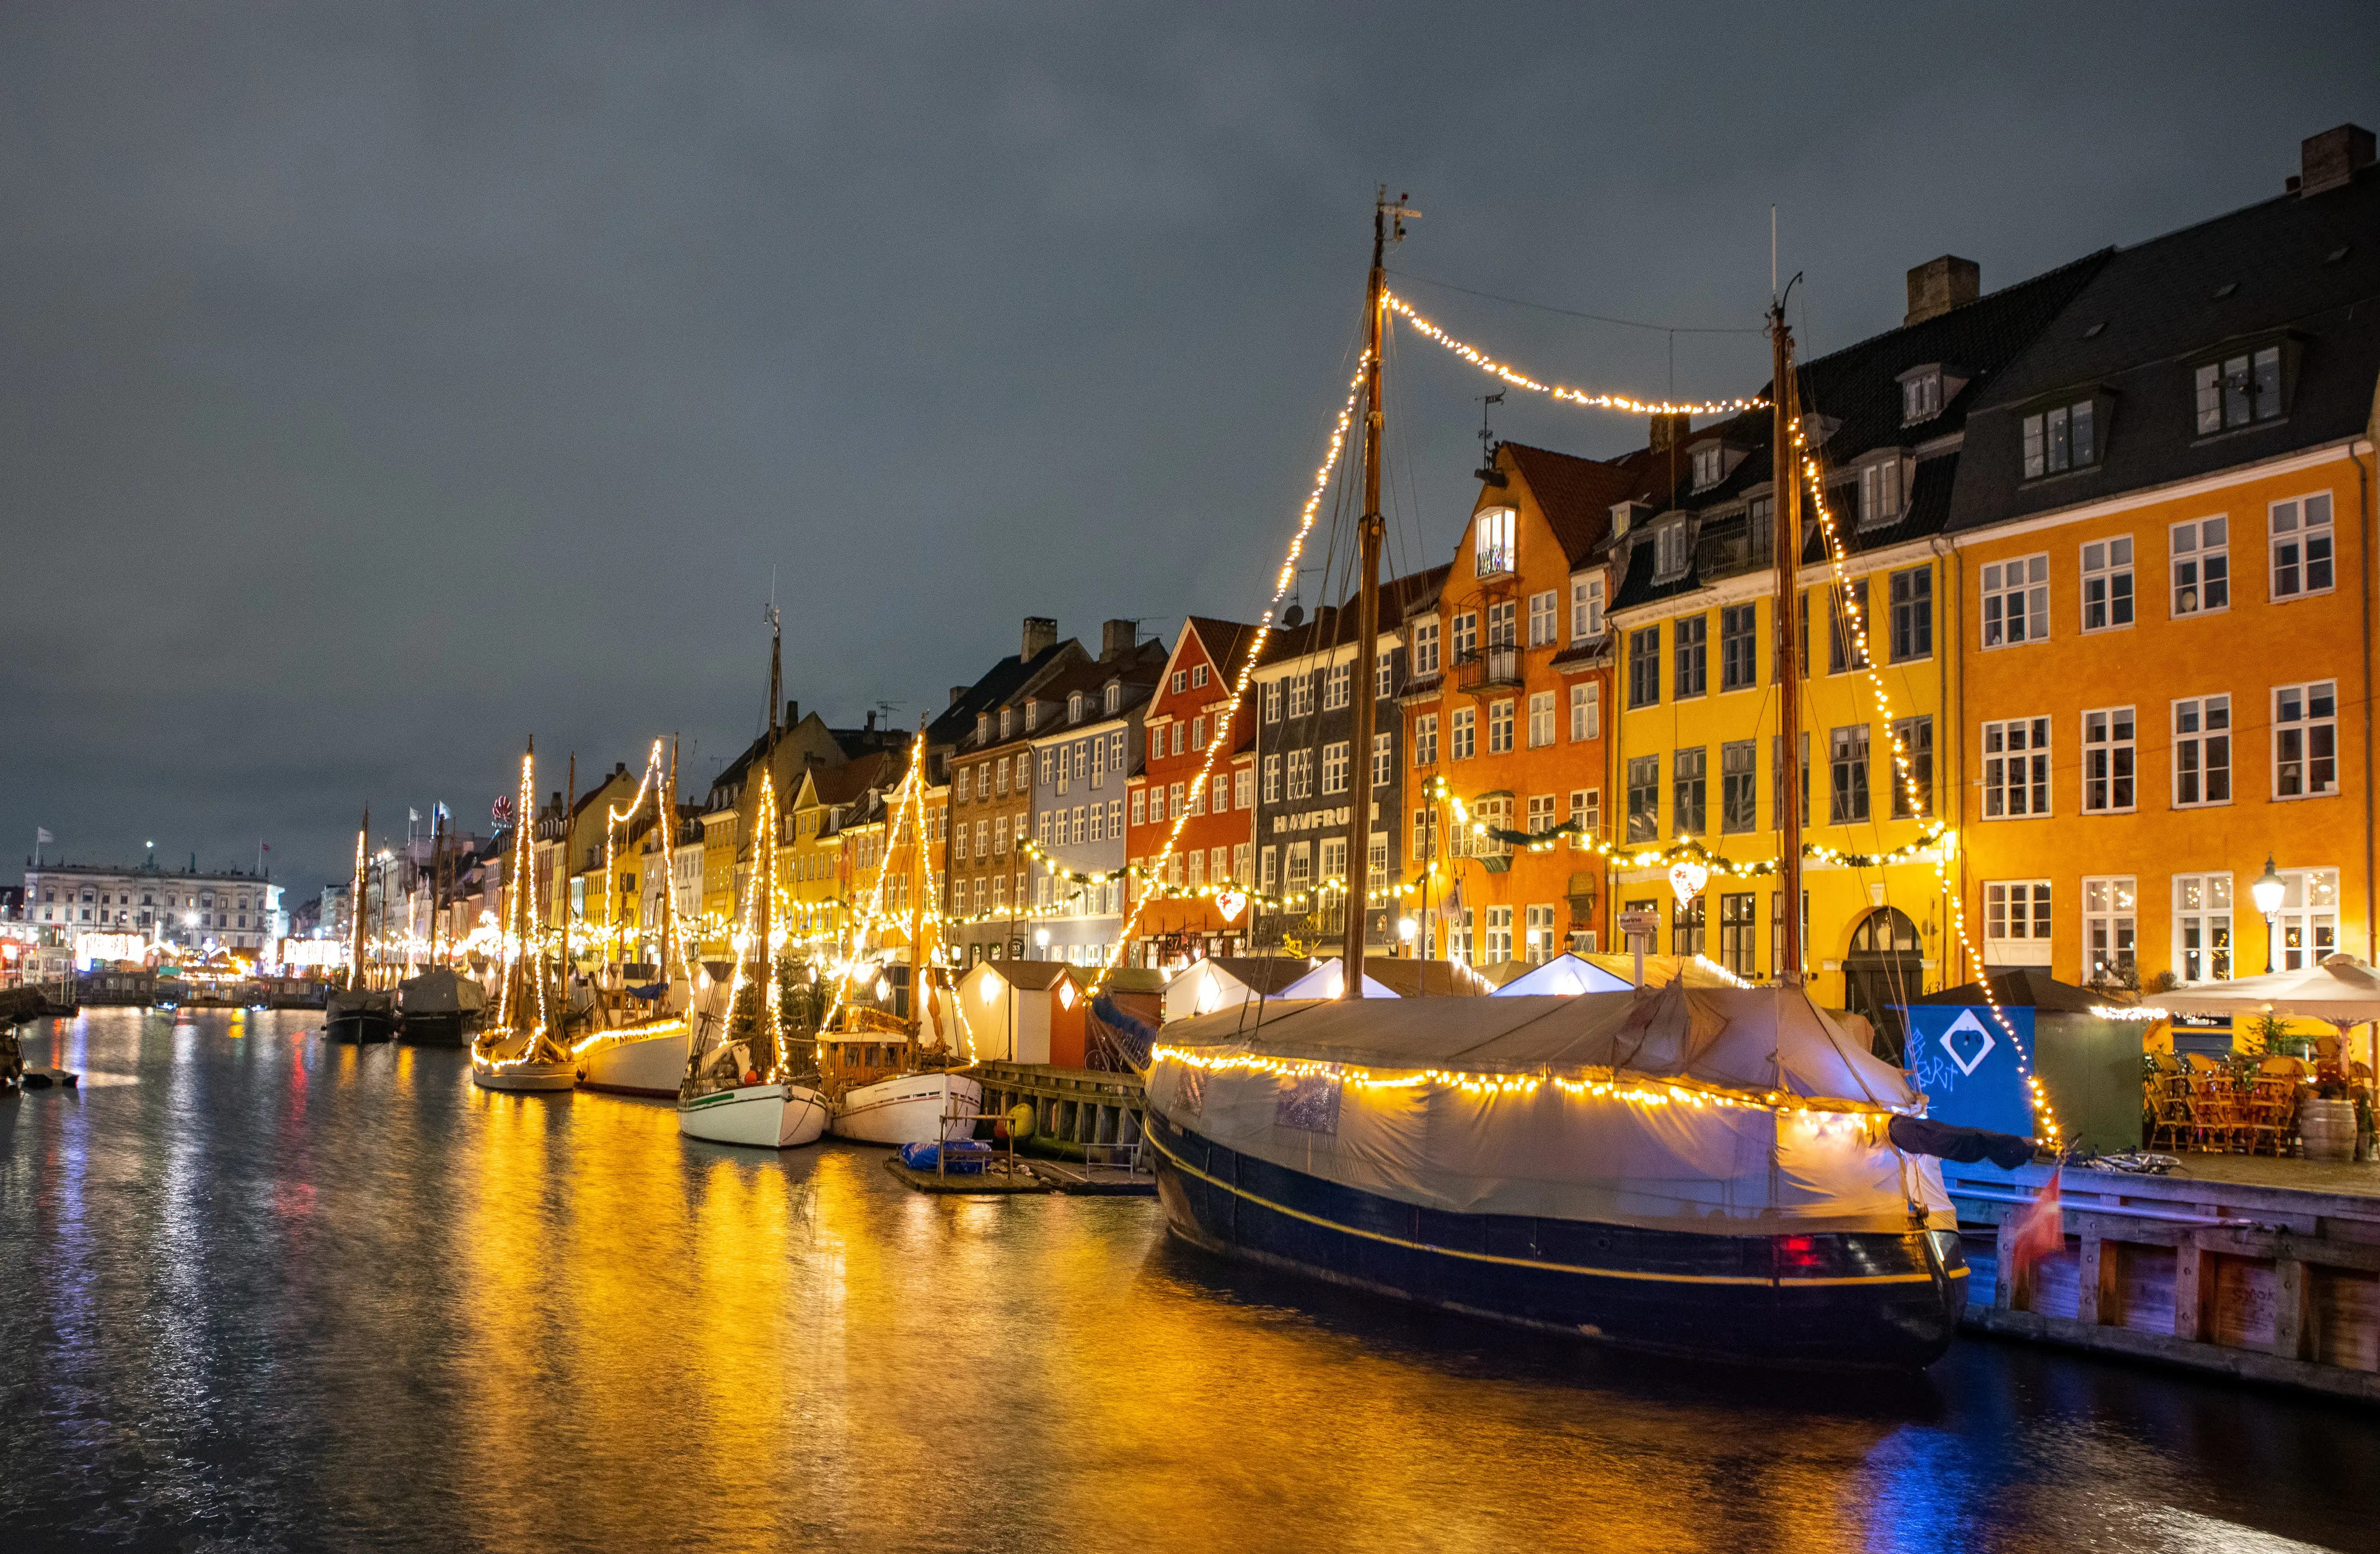 5-Day Magical Christmas Holiday Itinerary in Copenhagen, Denmark